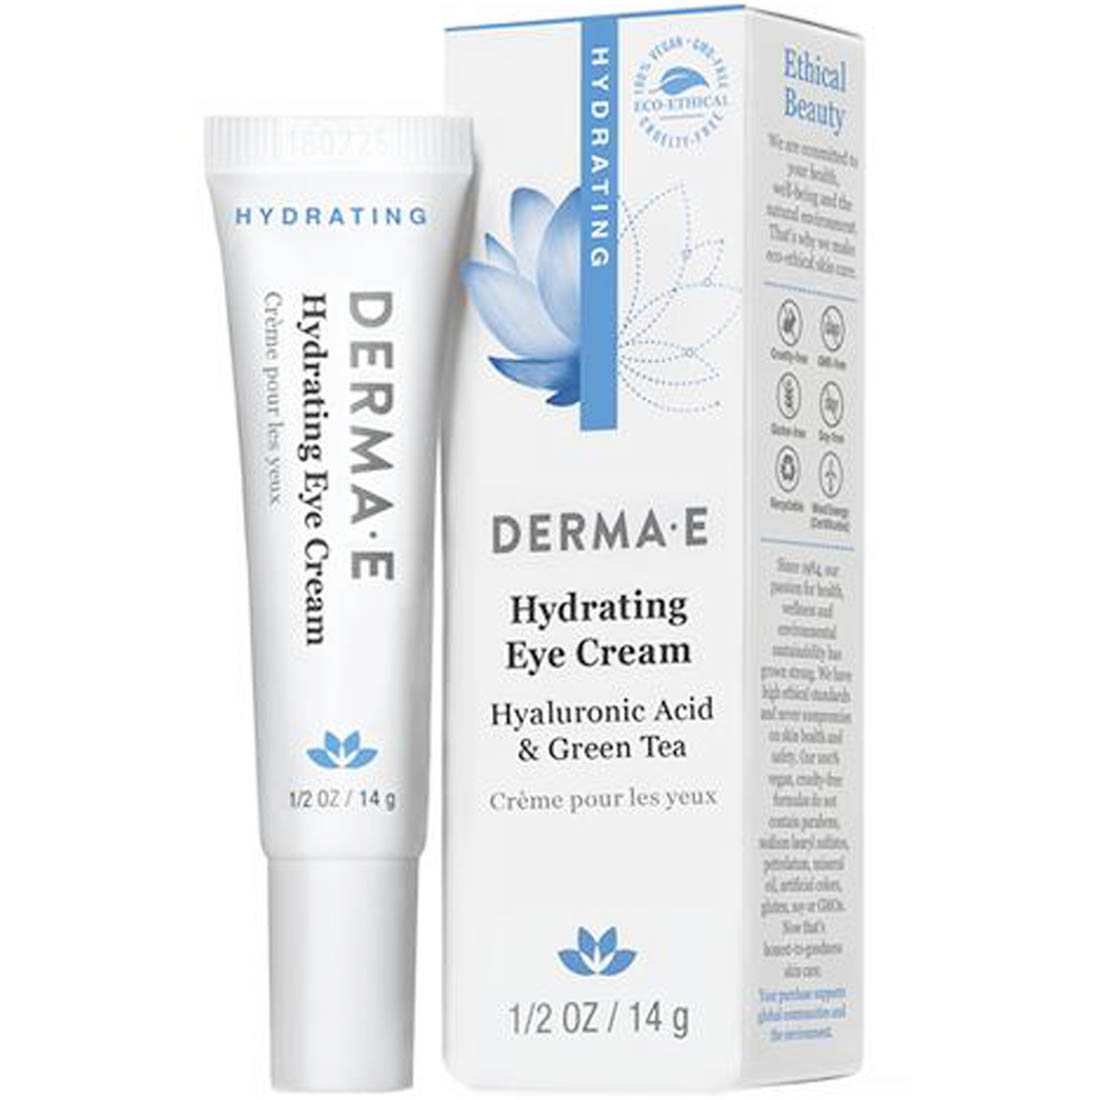 Derma E Hydrating Eye Cream, Hyaluronic Acid, 14g